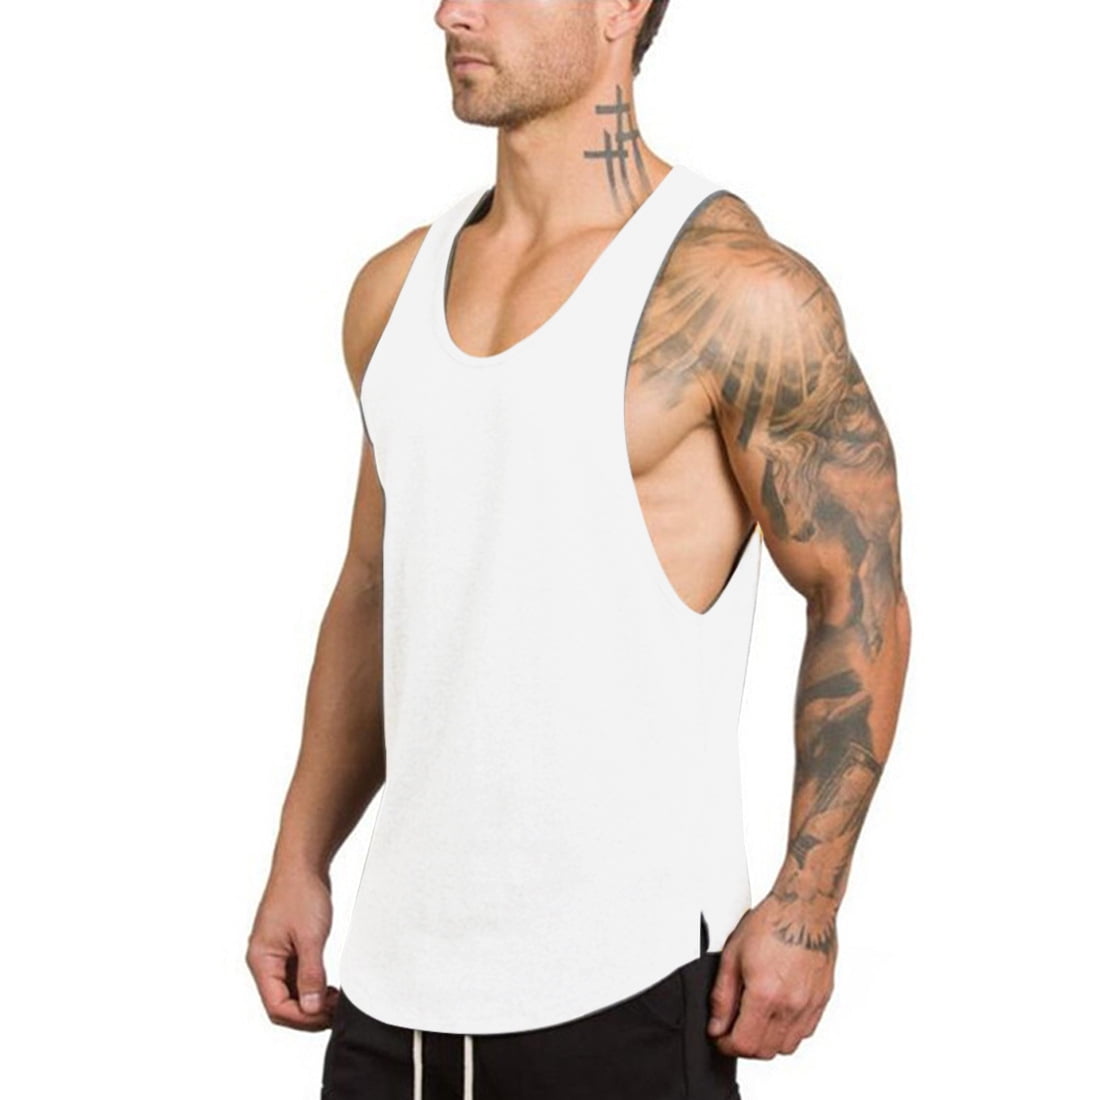 Mens Gym Workout Stringer Tank Top sleeveless muscle workout shirt ...